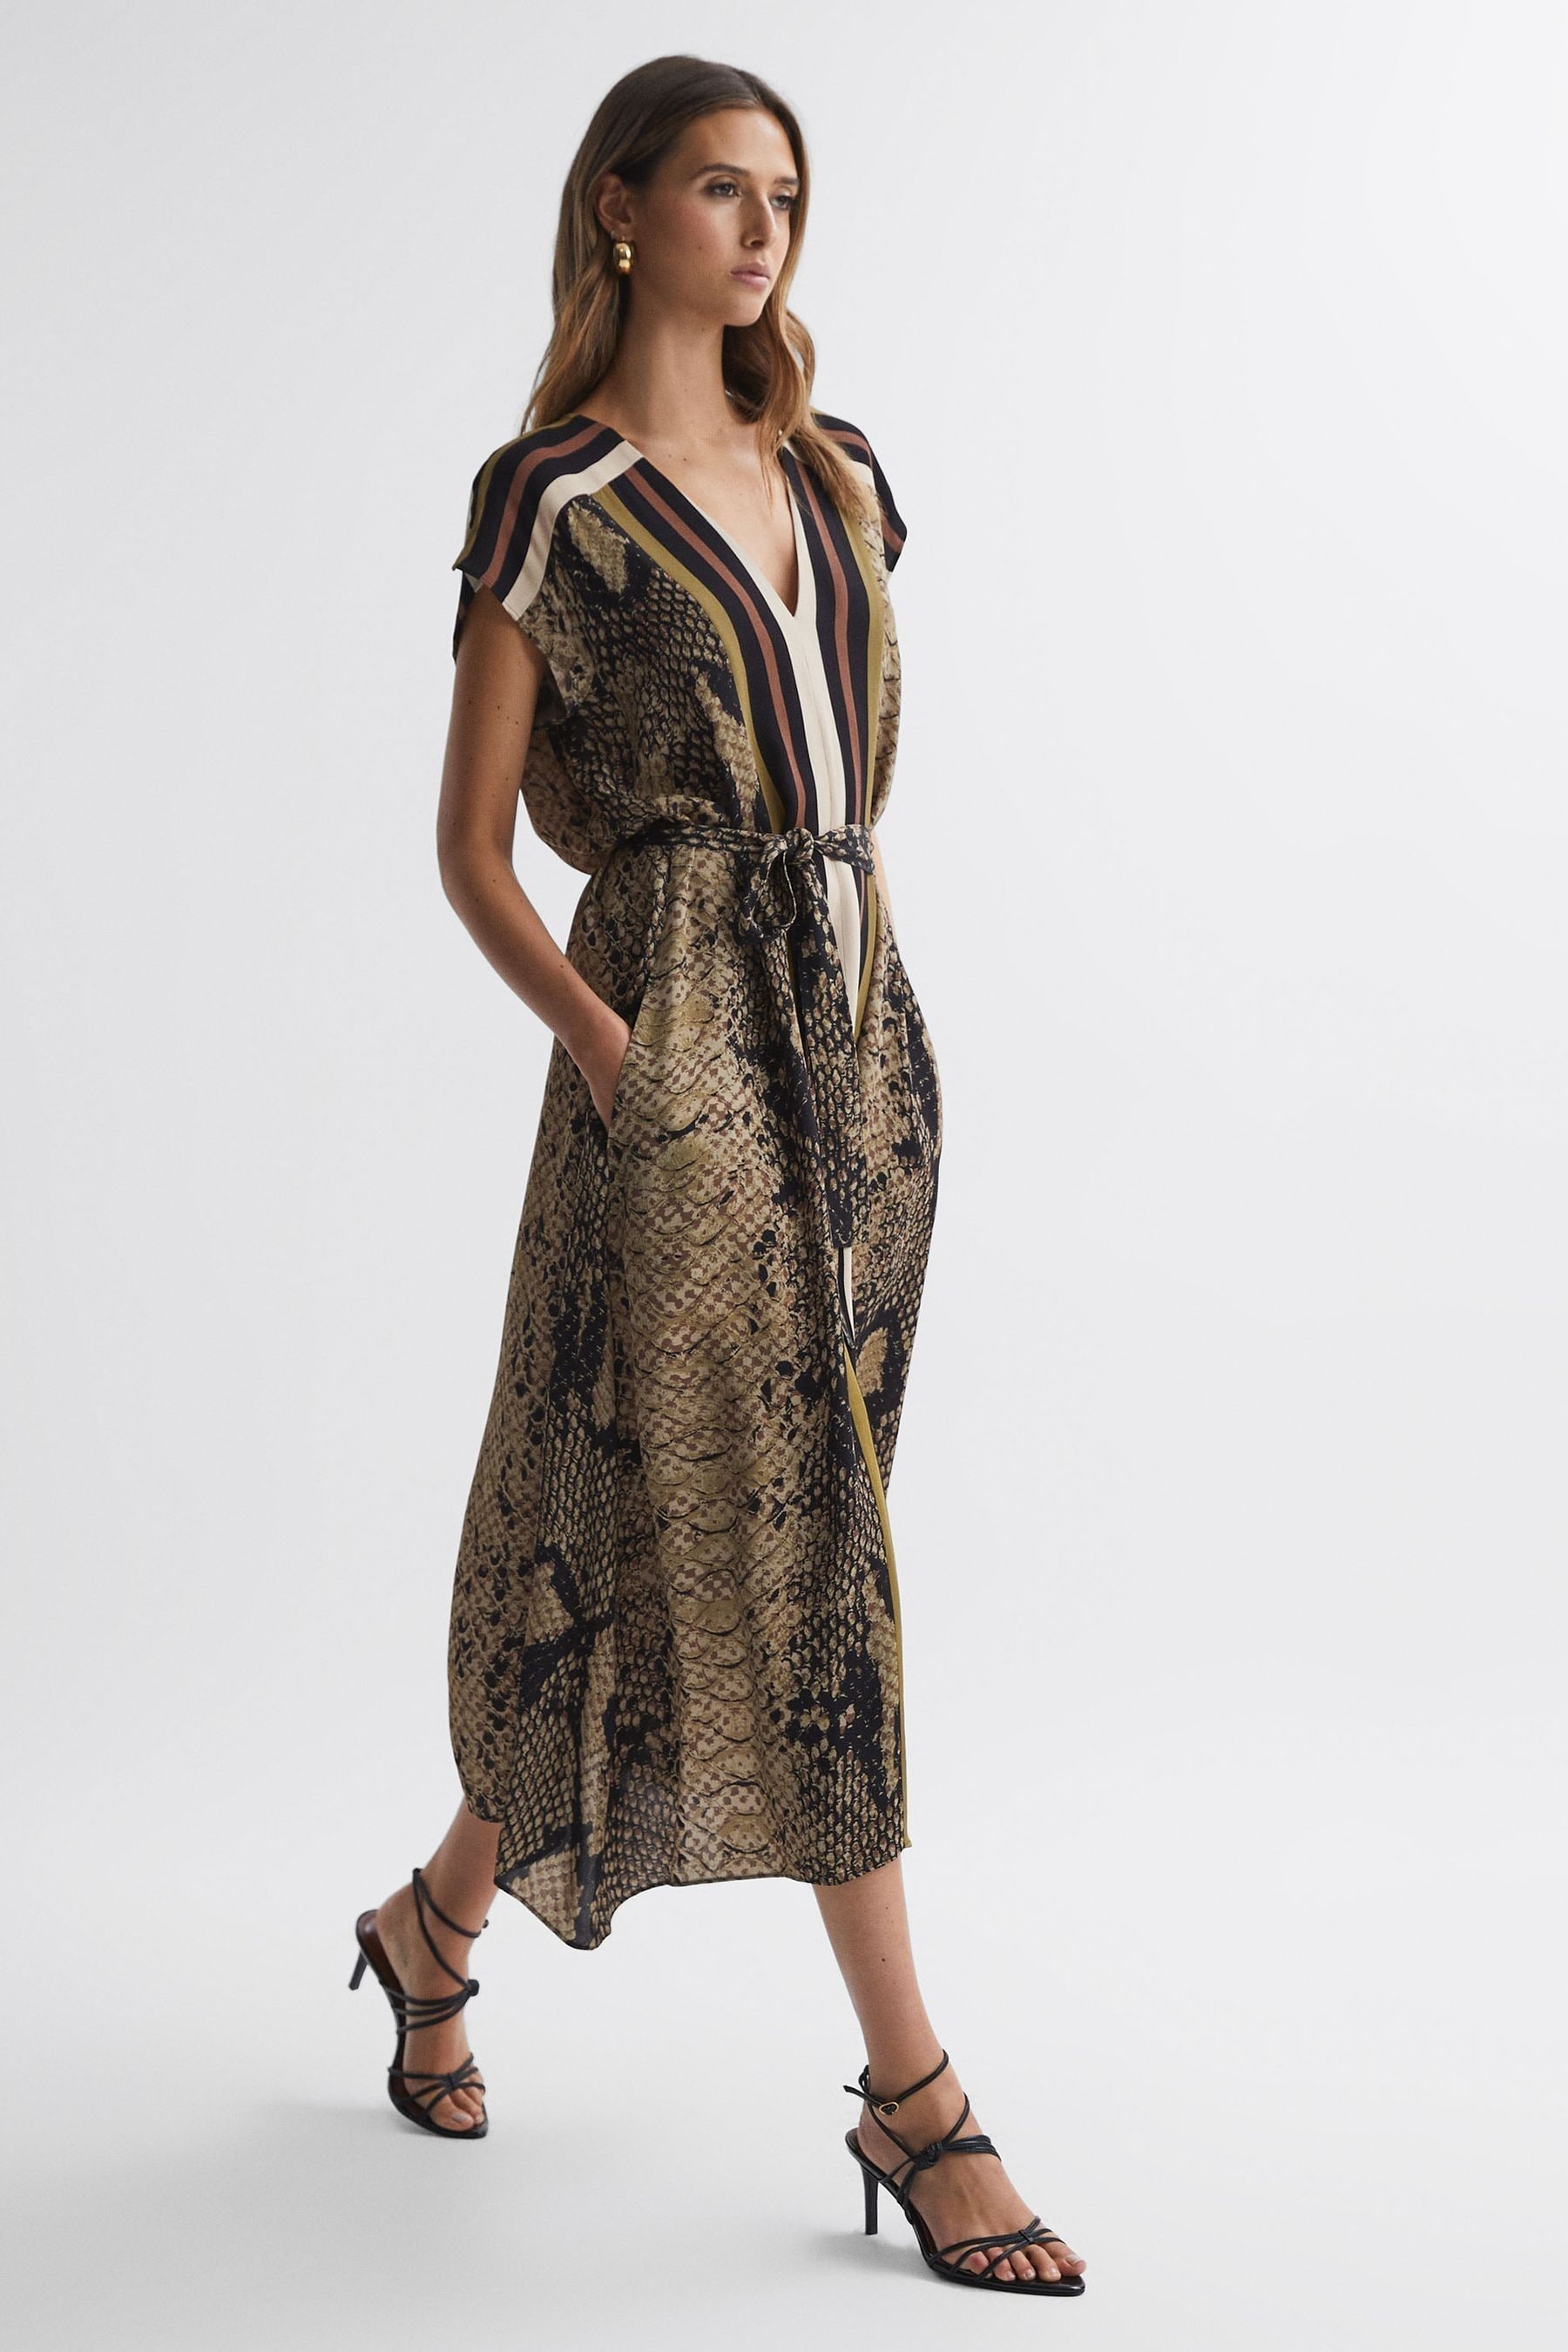 Reiss Bea - Brown Snake Print Midi Dress, Us 4